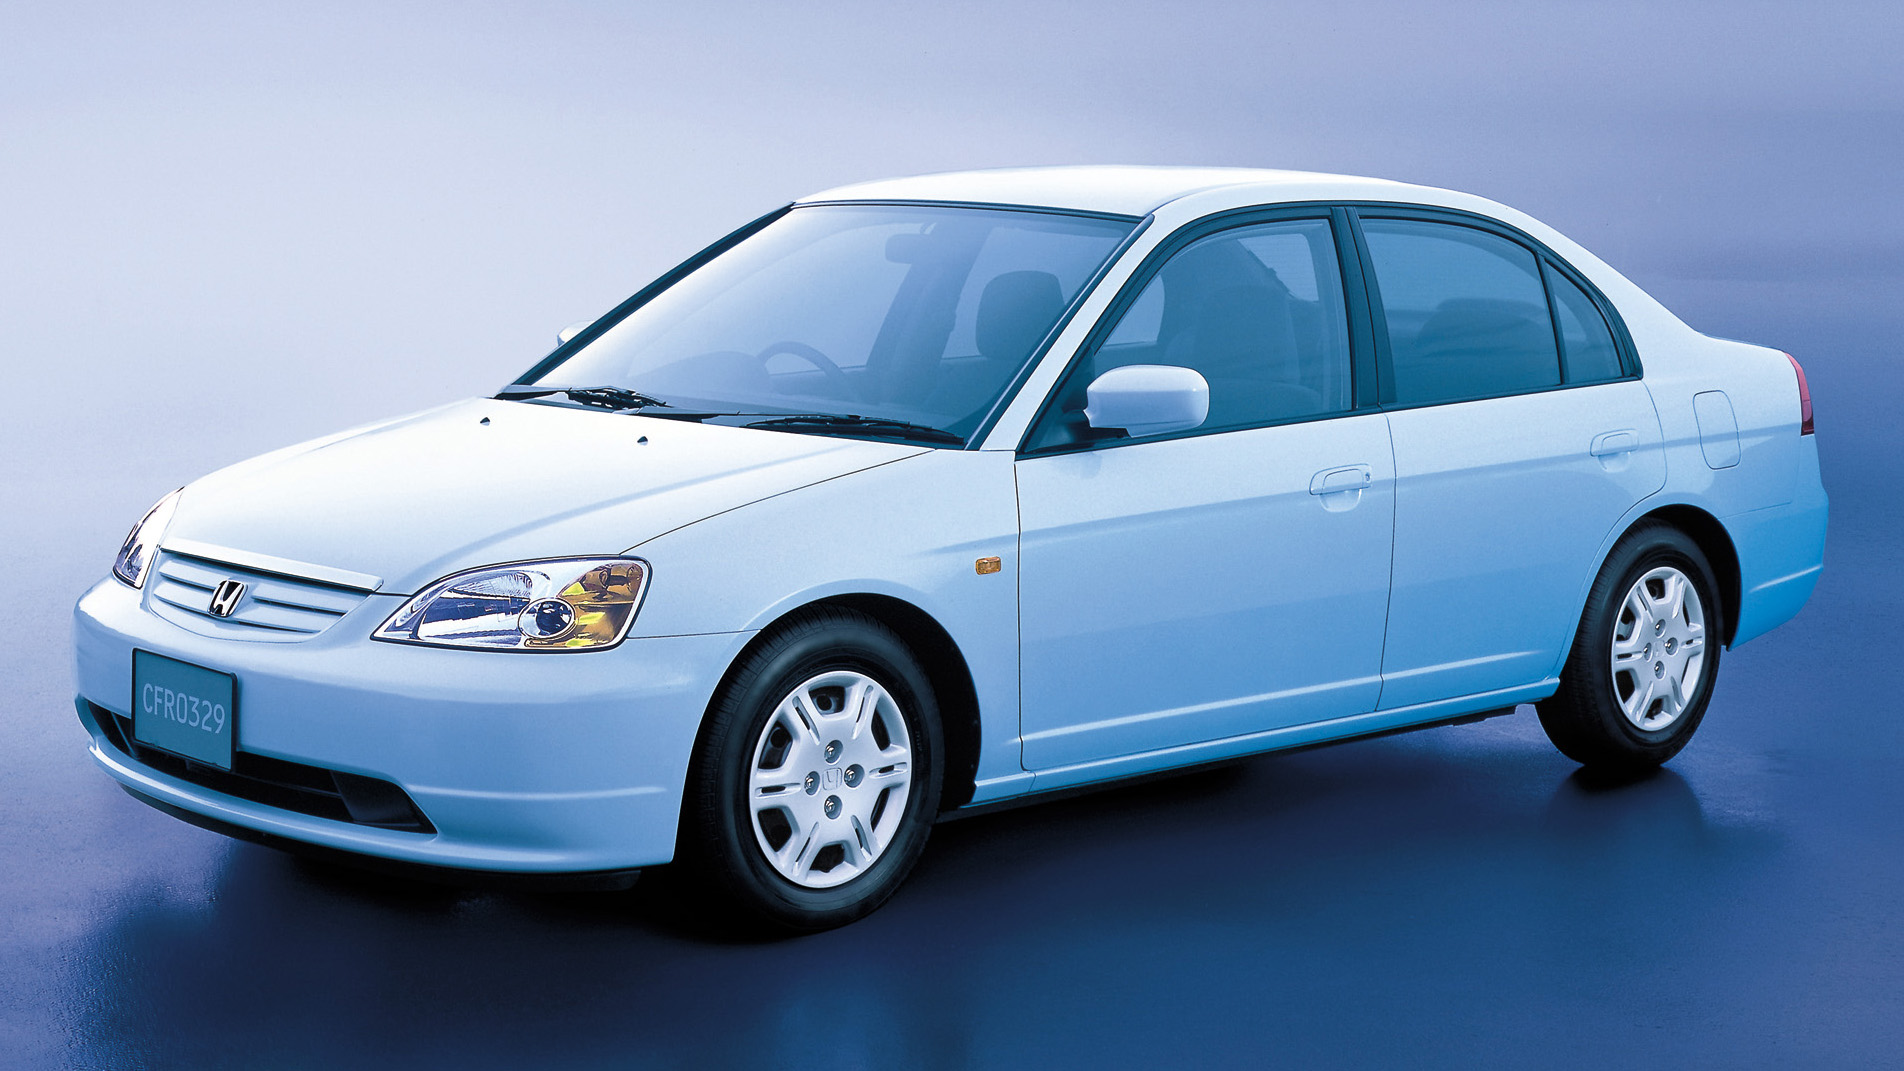 Honda civic recalls airbags